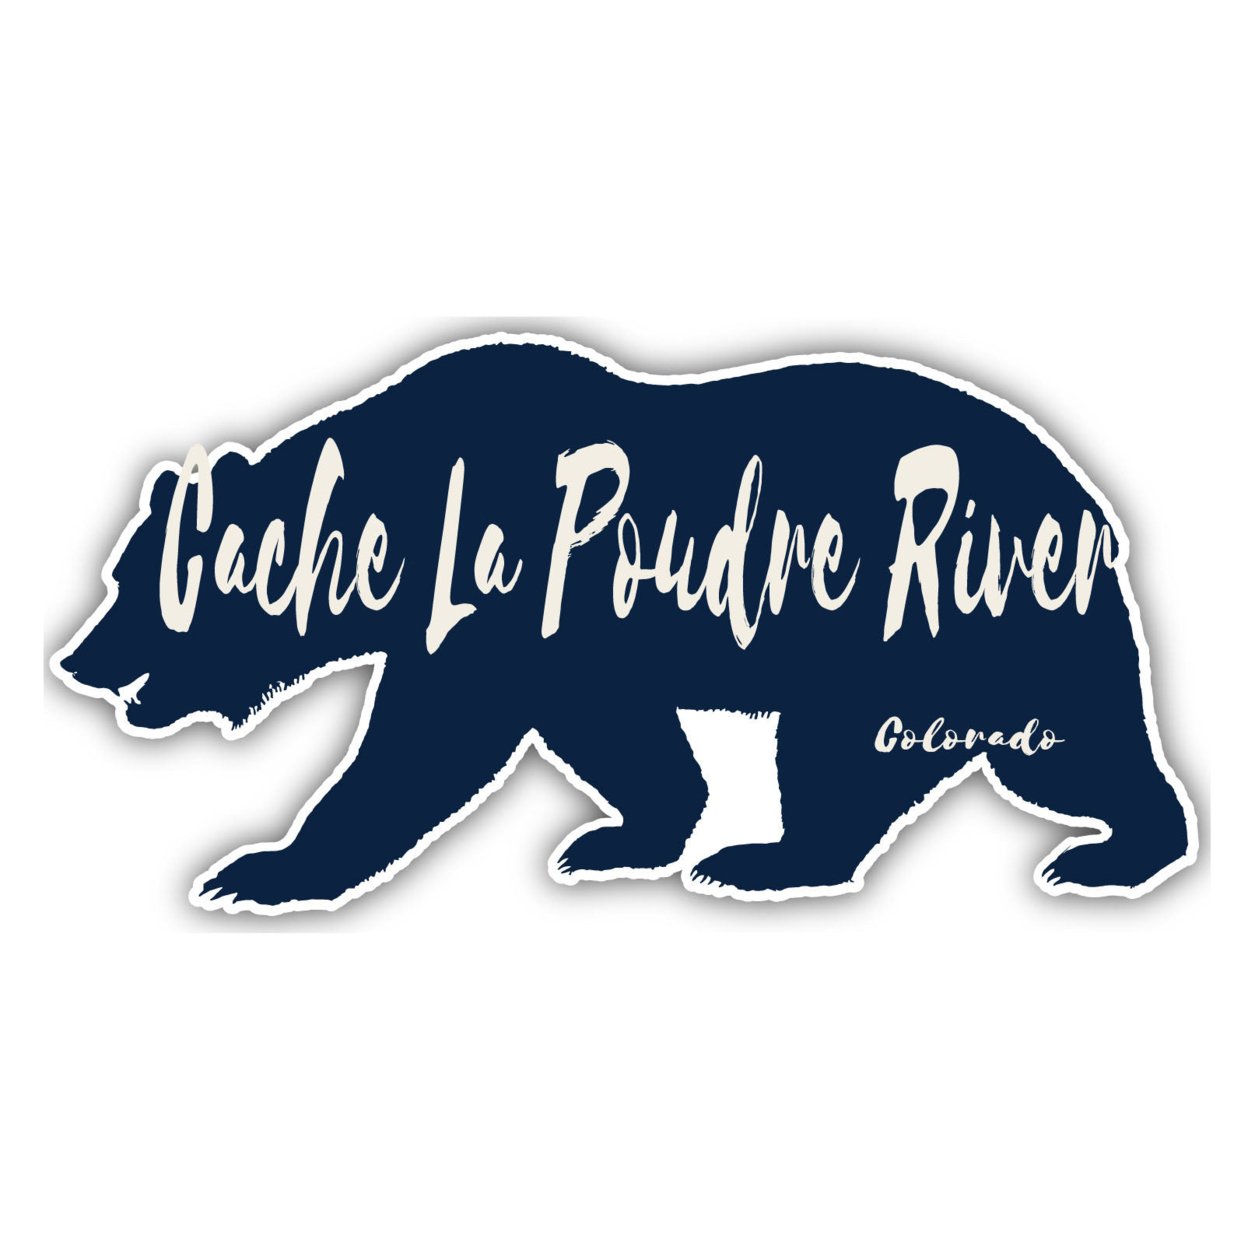 Cache La Poudre River Colorado Souvenir Decorative Stickers (Choose Theme And Size) - 4-Pack, 10-Inch, Bear